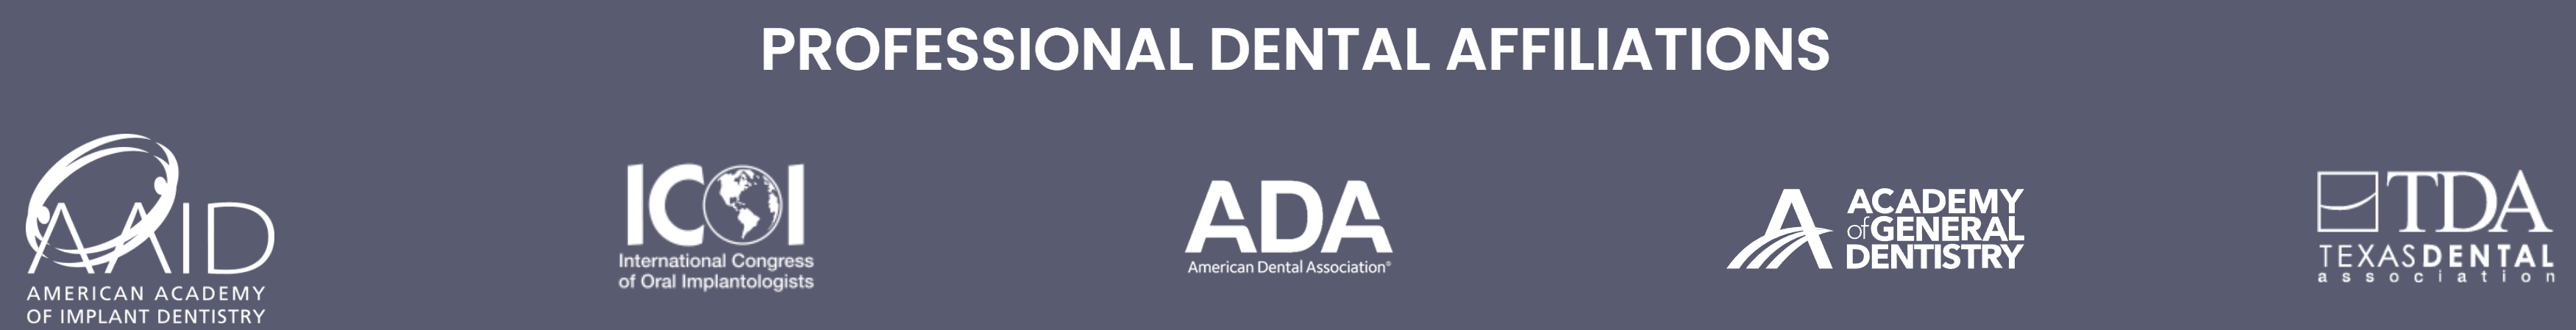 Professional dental affiliations for Dr. Hedieh Pournik